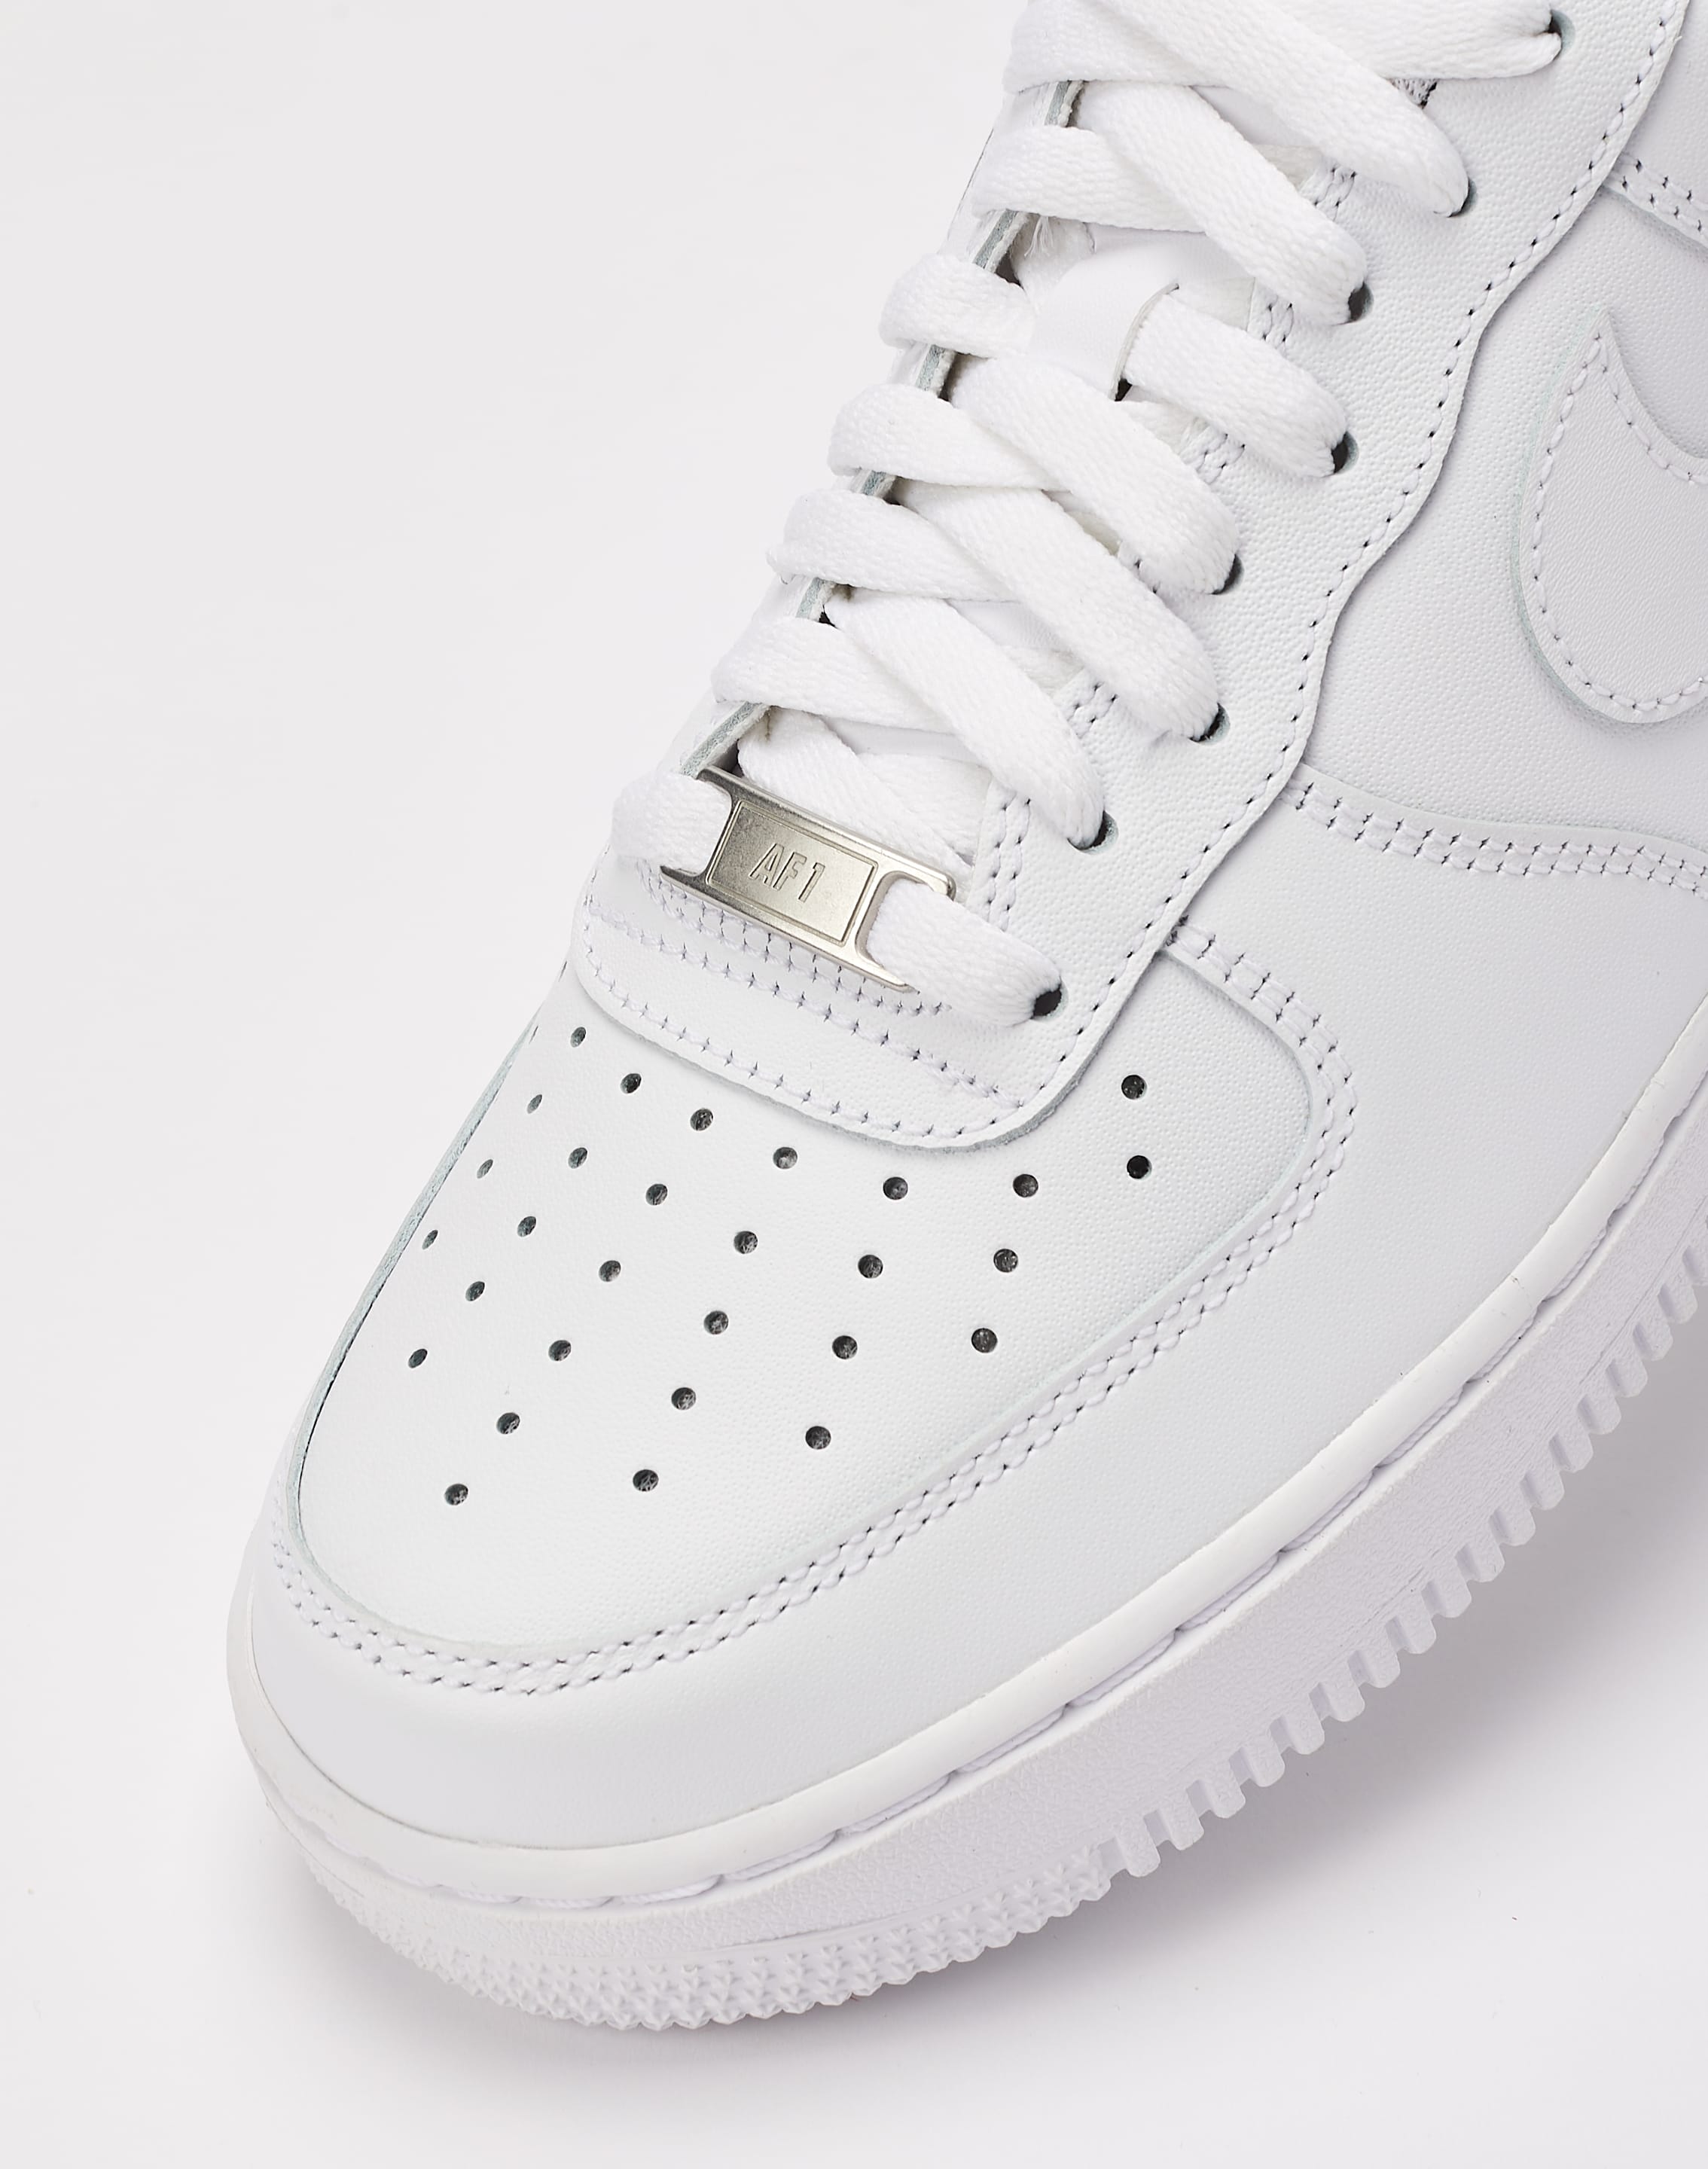 Shop Nike Air Force 1 Low '07 CW2288-111 white